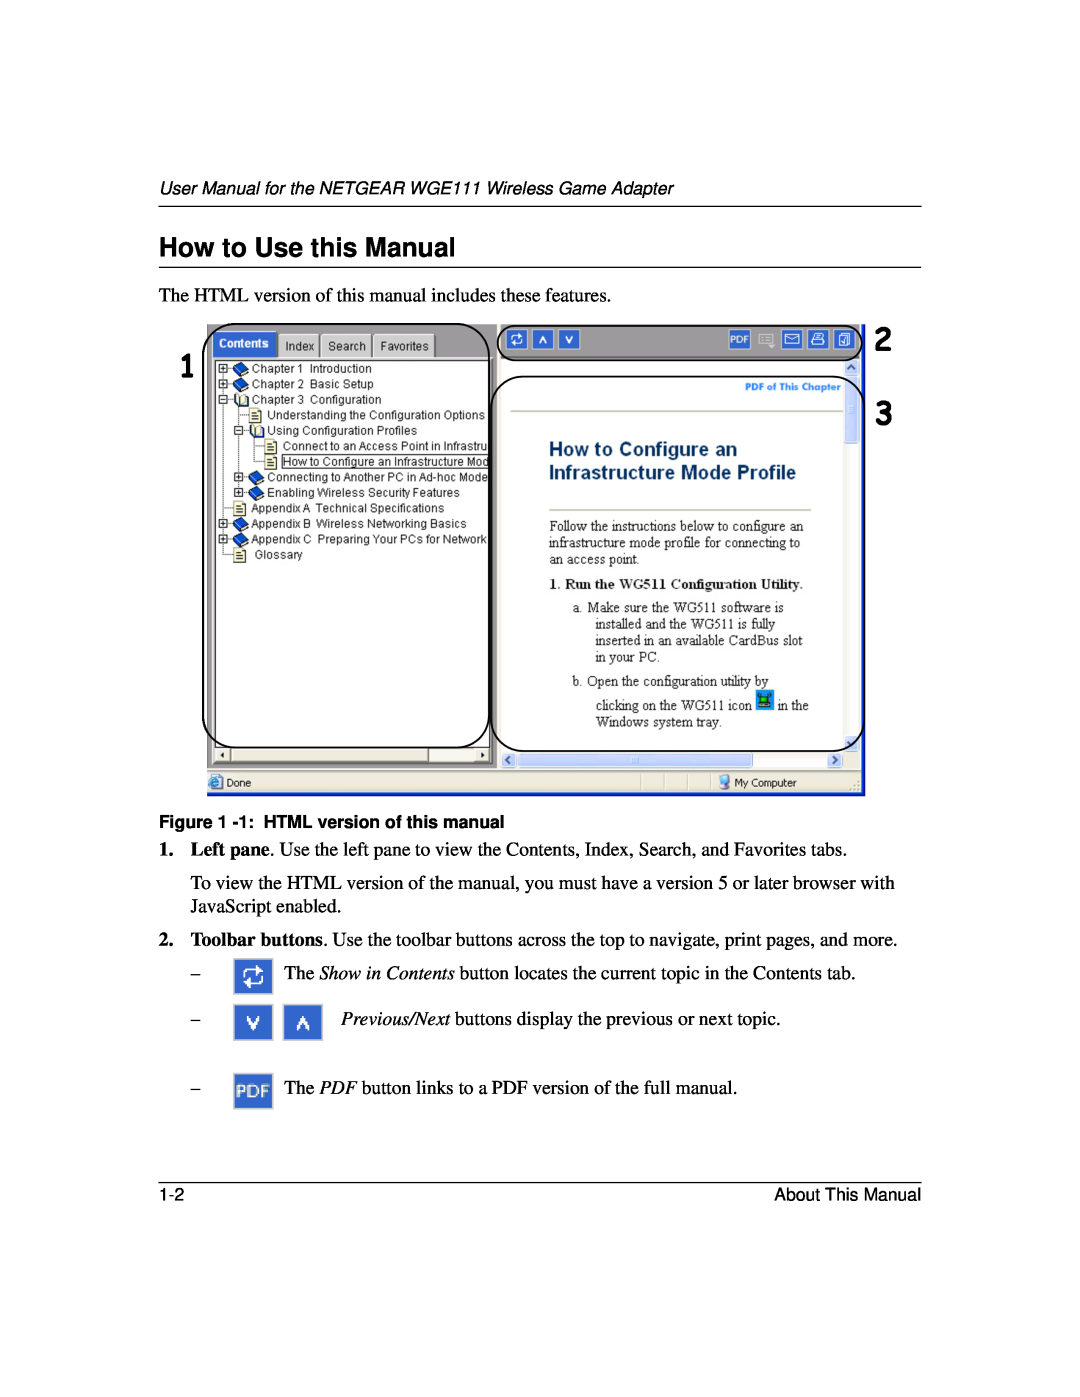 NETGEAR WGE111 user manual How to Use this Manual 